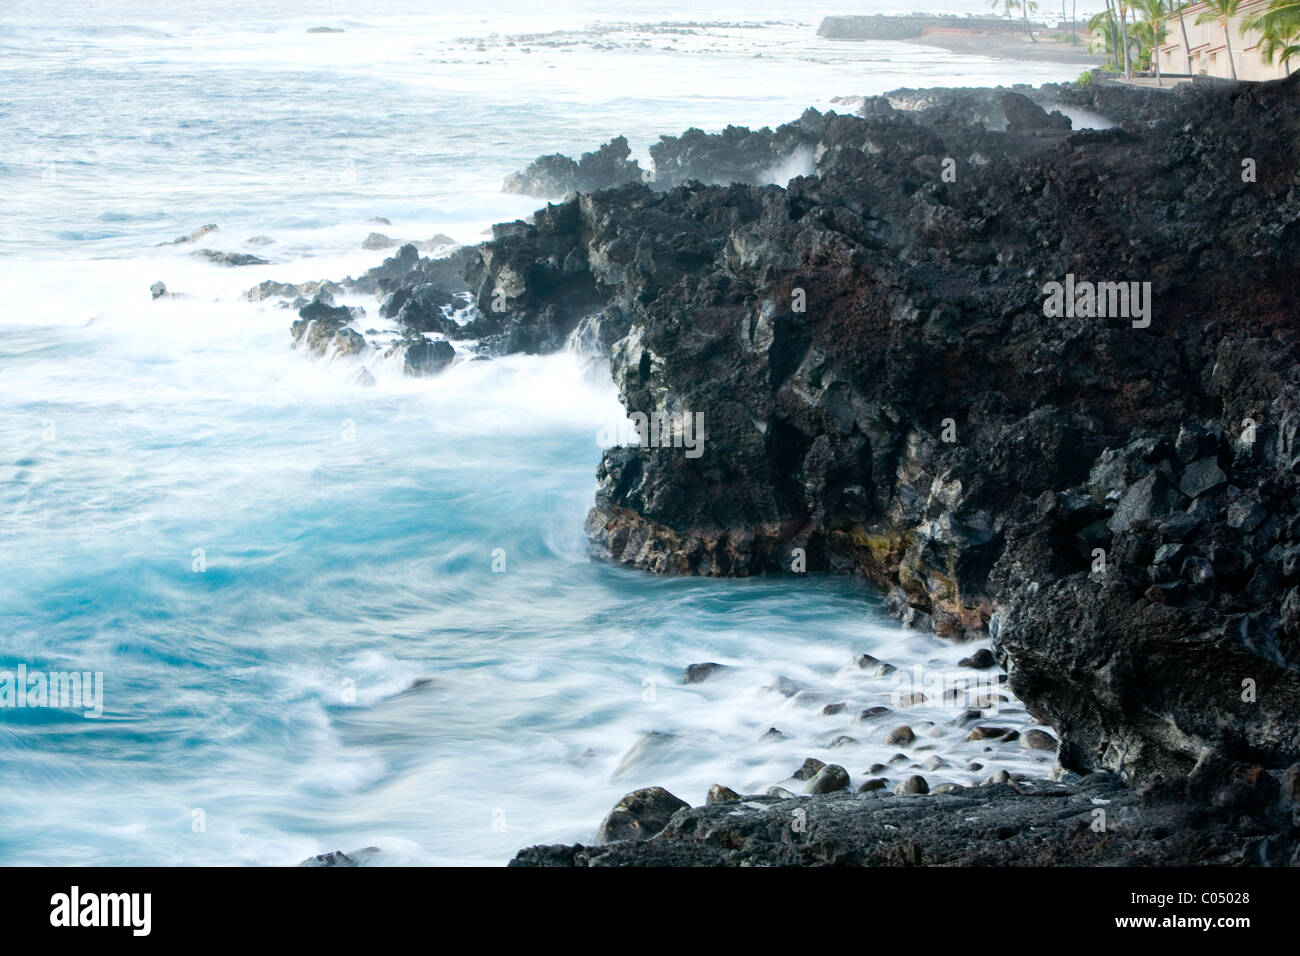 Canvas and Metal Photography Prints Kona Break Gorgeous Blue Sky and Aqua Waves Crash on Lava Rock in Hawaii